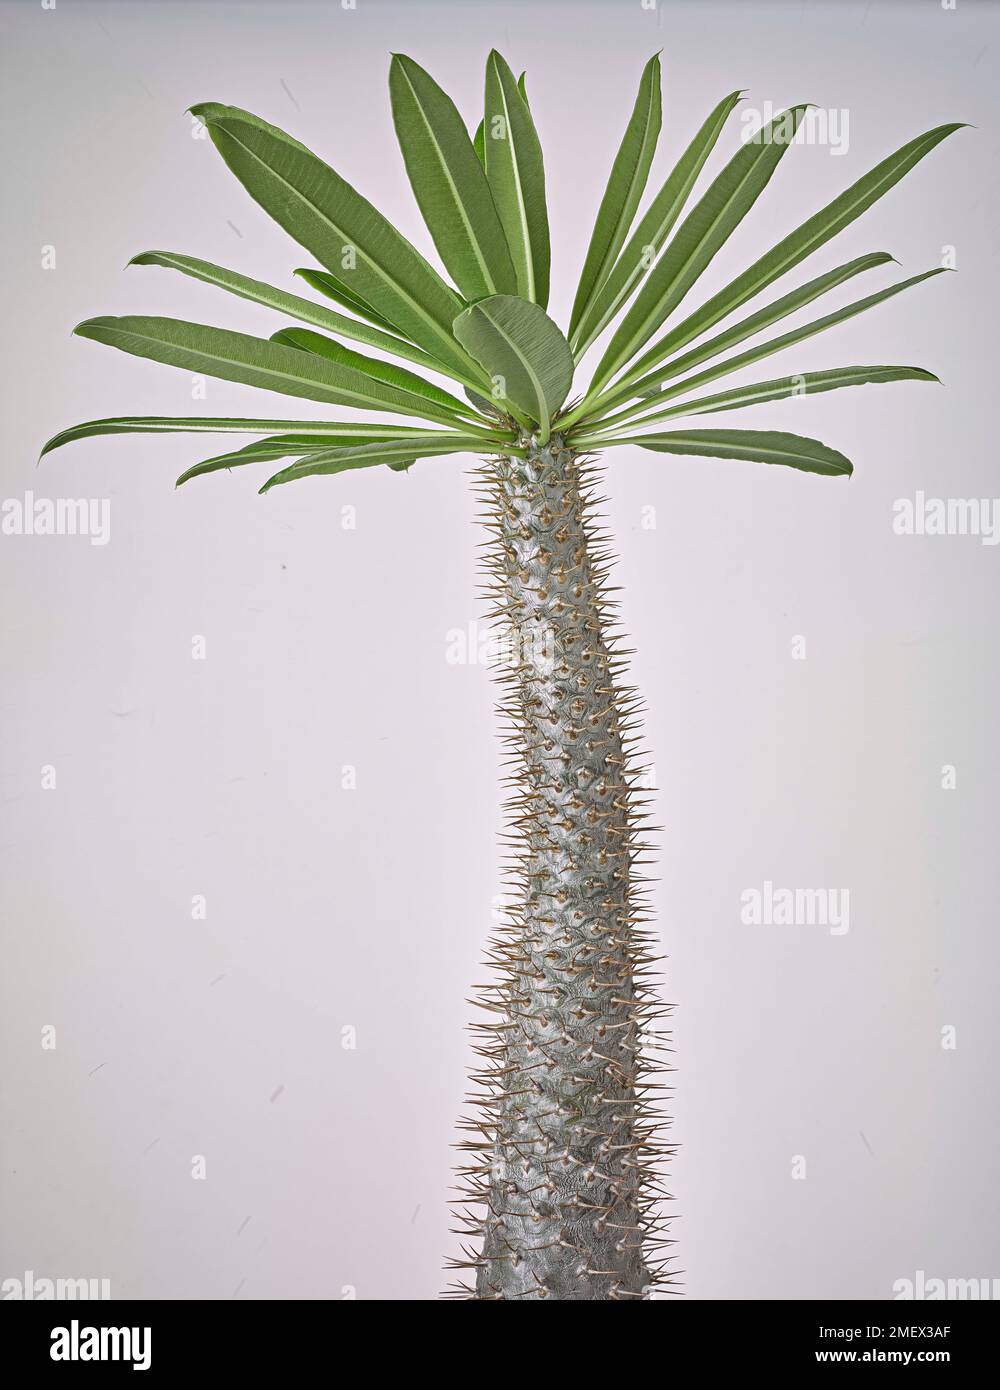 Pachypodium lamerei (palma del Madagascar) pianta succulenta con tronco grigio argenteo coperto da spine affilate Foto Stock